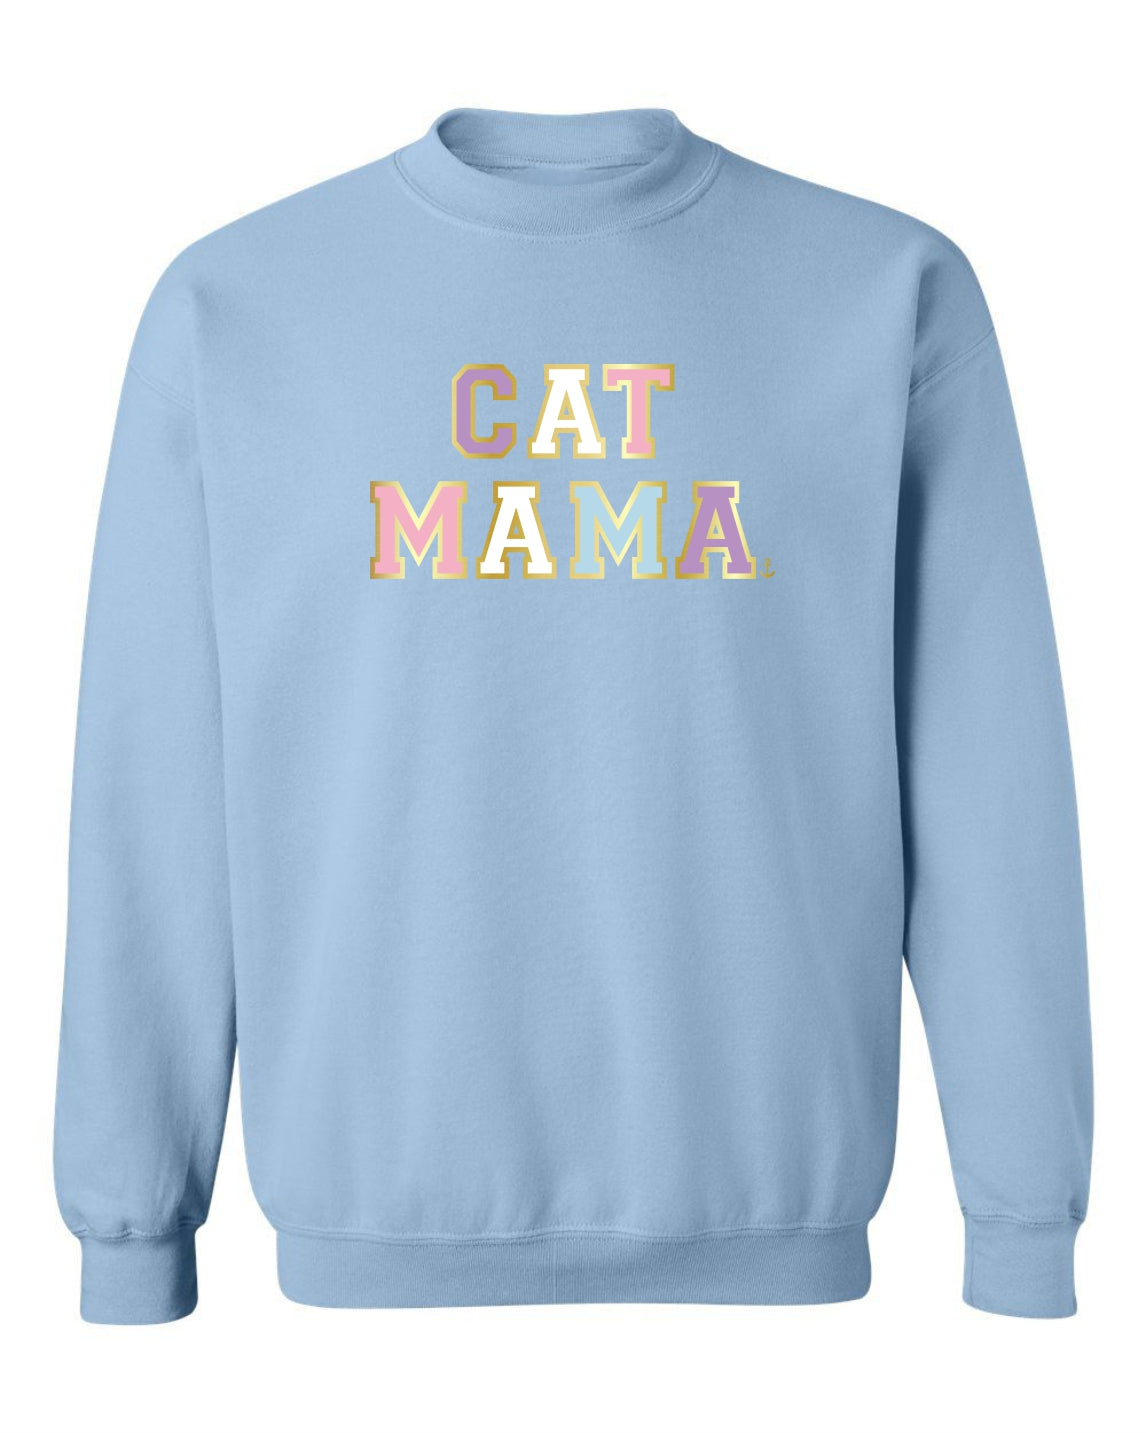 "Cat Mama" Varsity Unisex Crewneck Sweatshirt